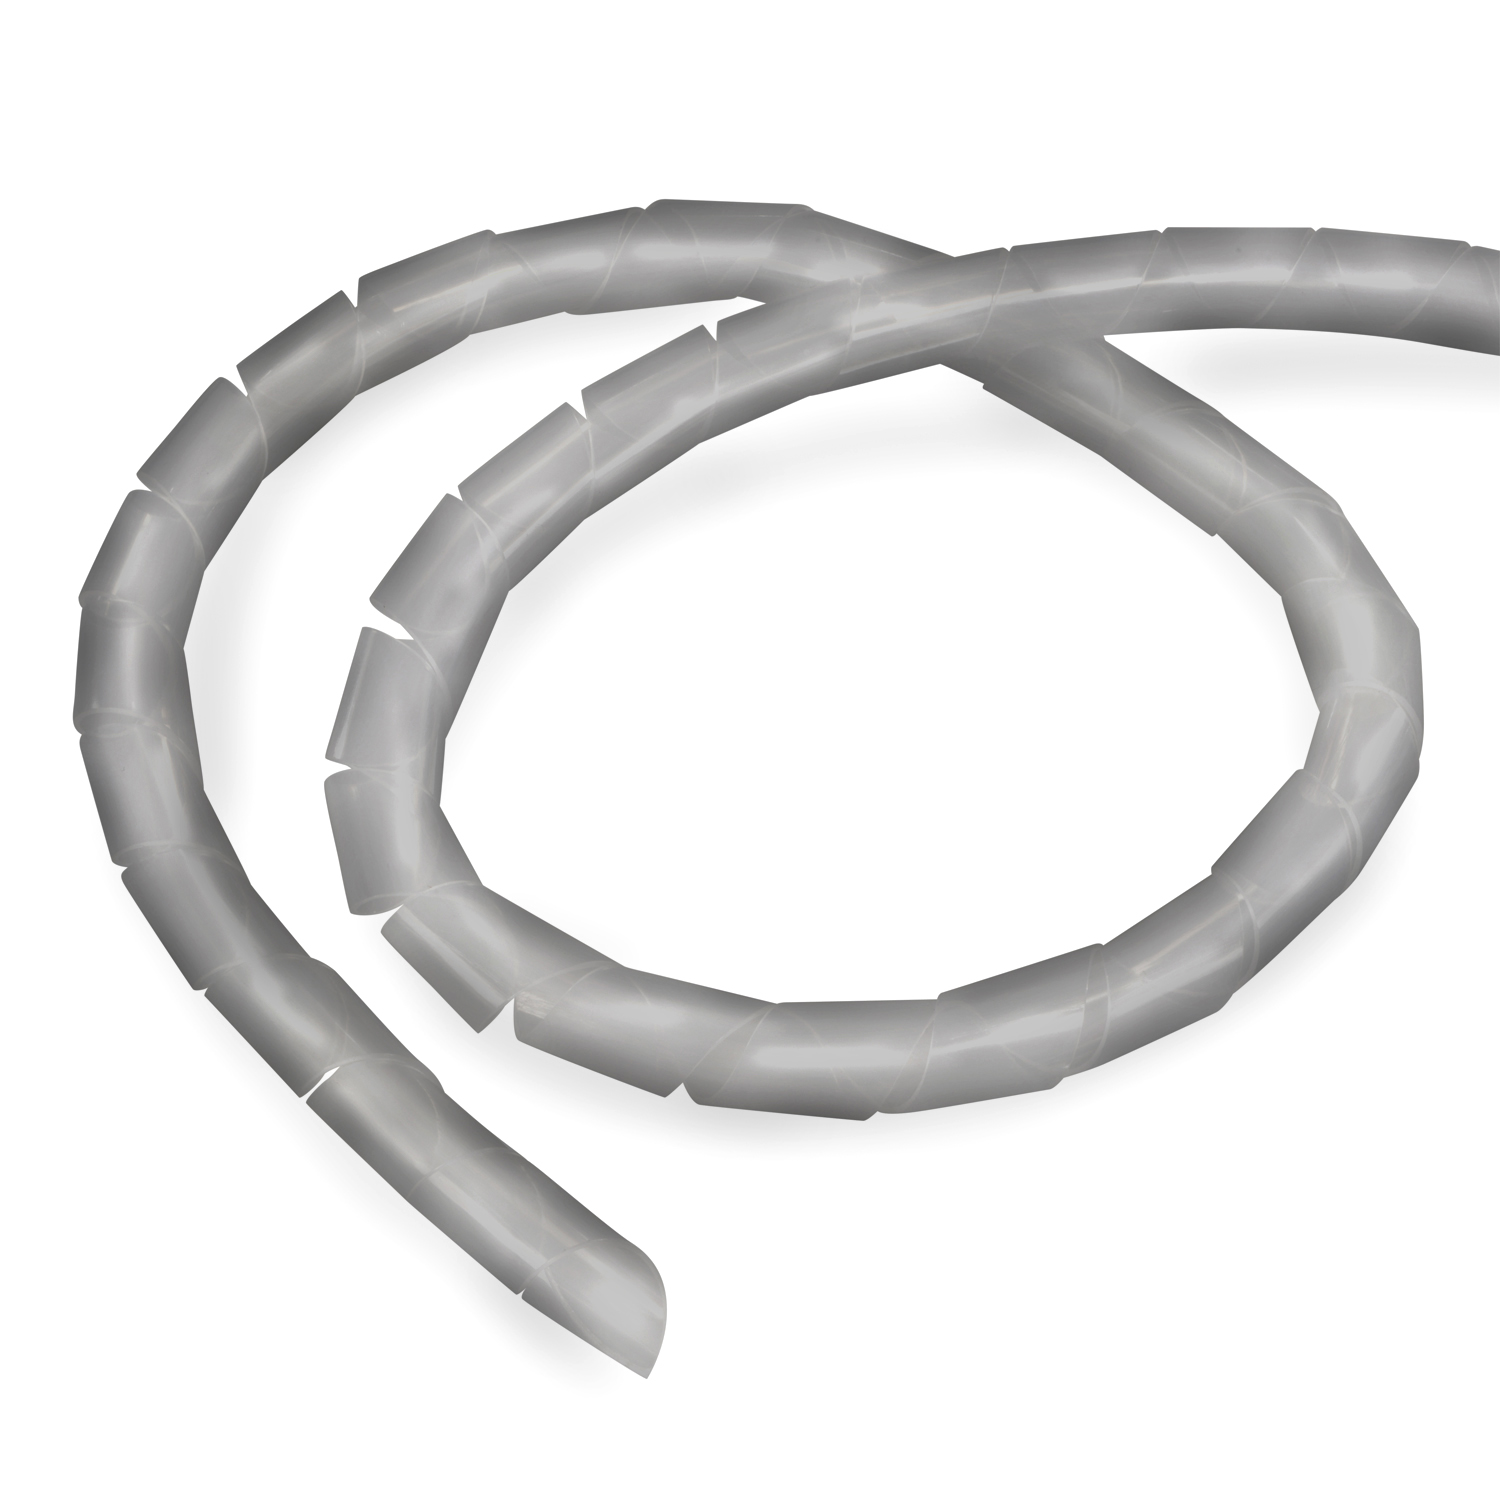 TPFNET 3er Pack Premium Silber 10m 4-50mm, Silber, Kabelschlauch, Spiral-Kabelschlauch